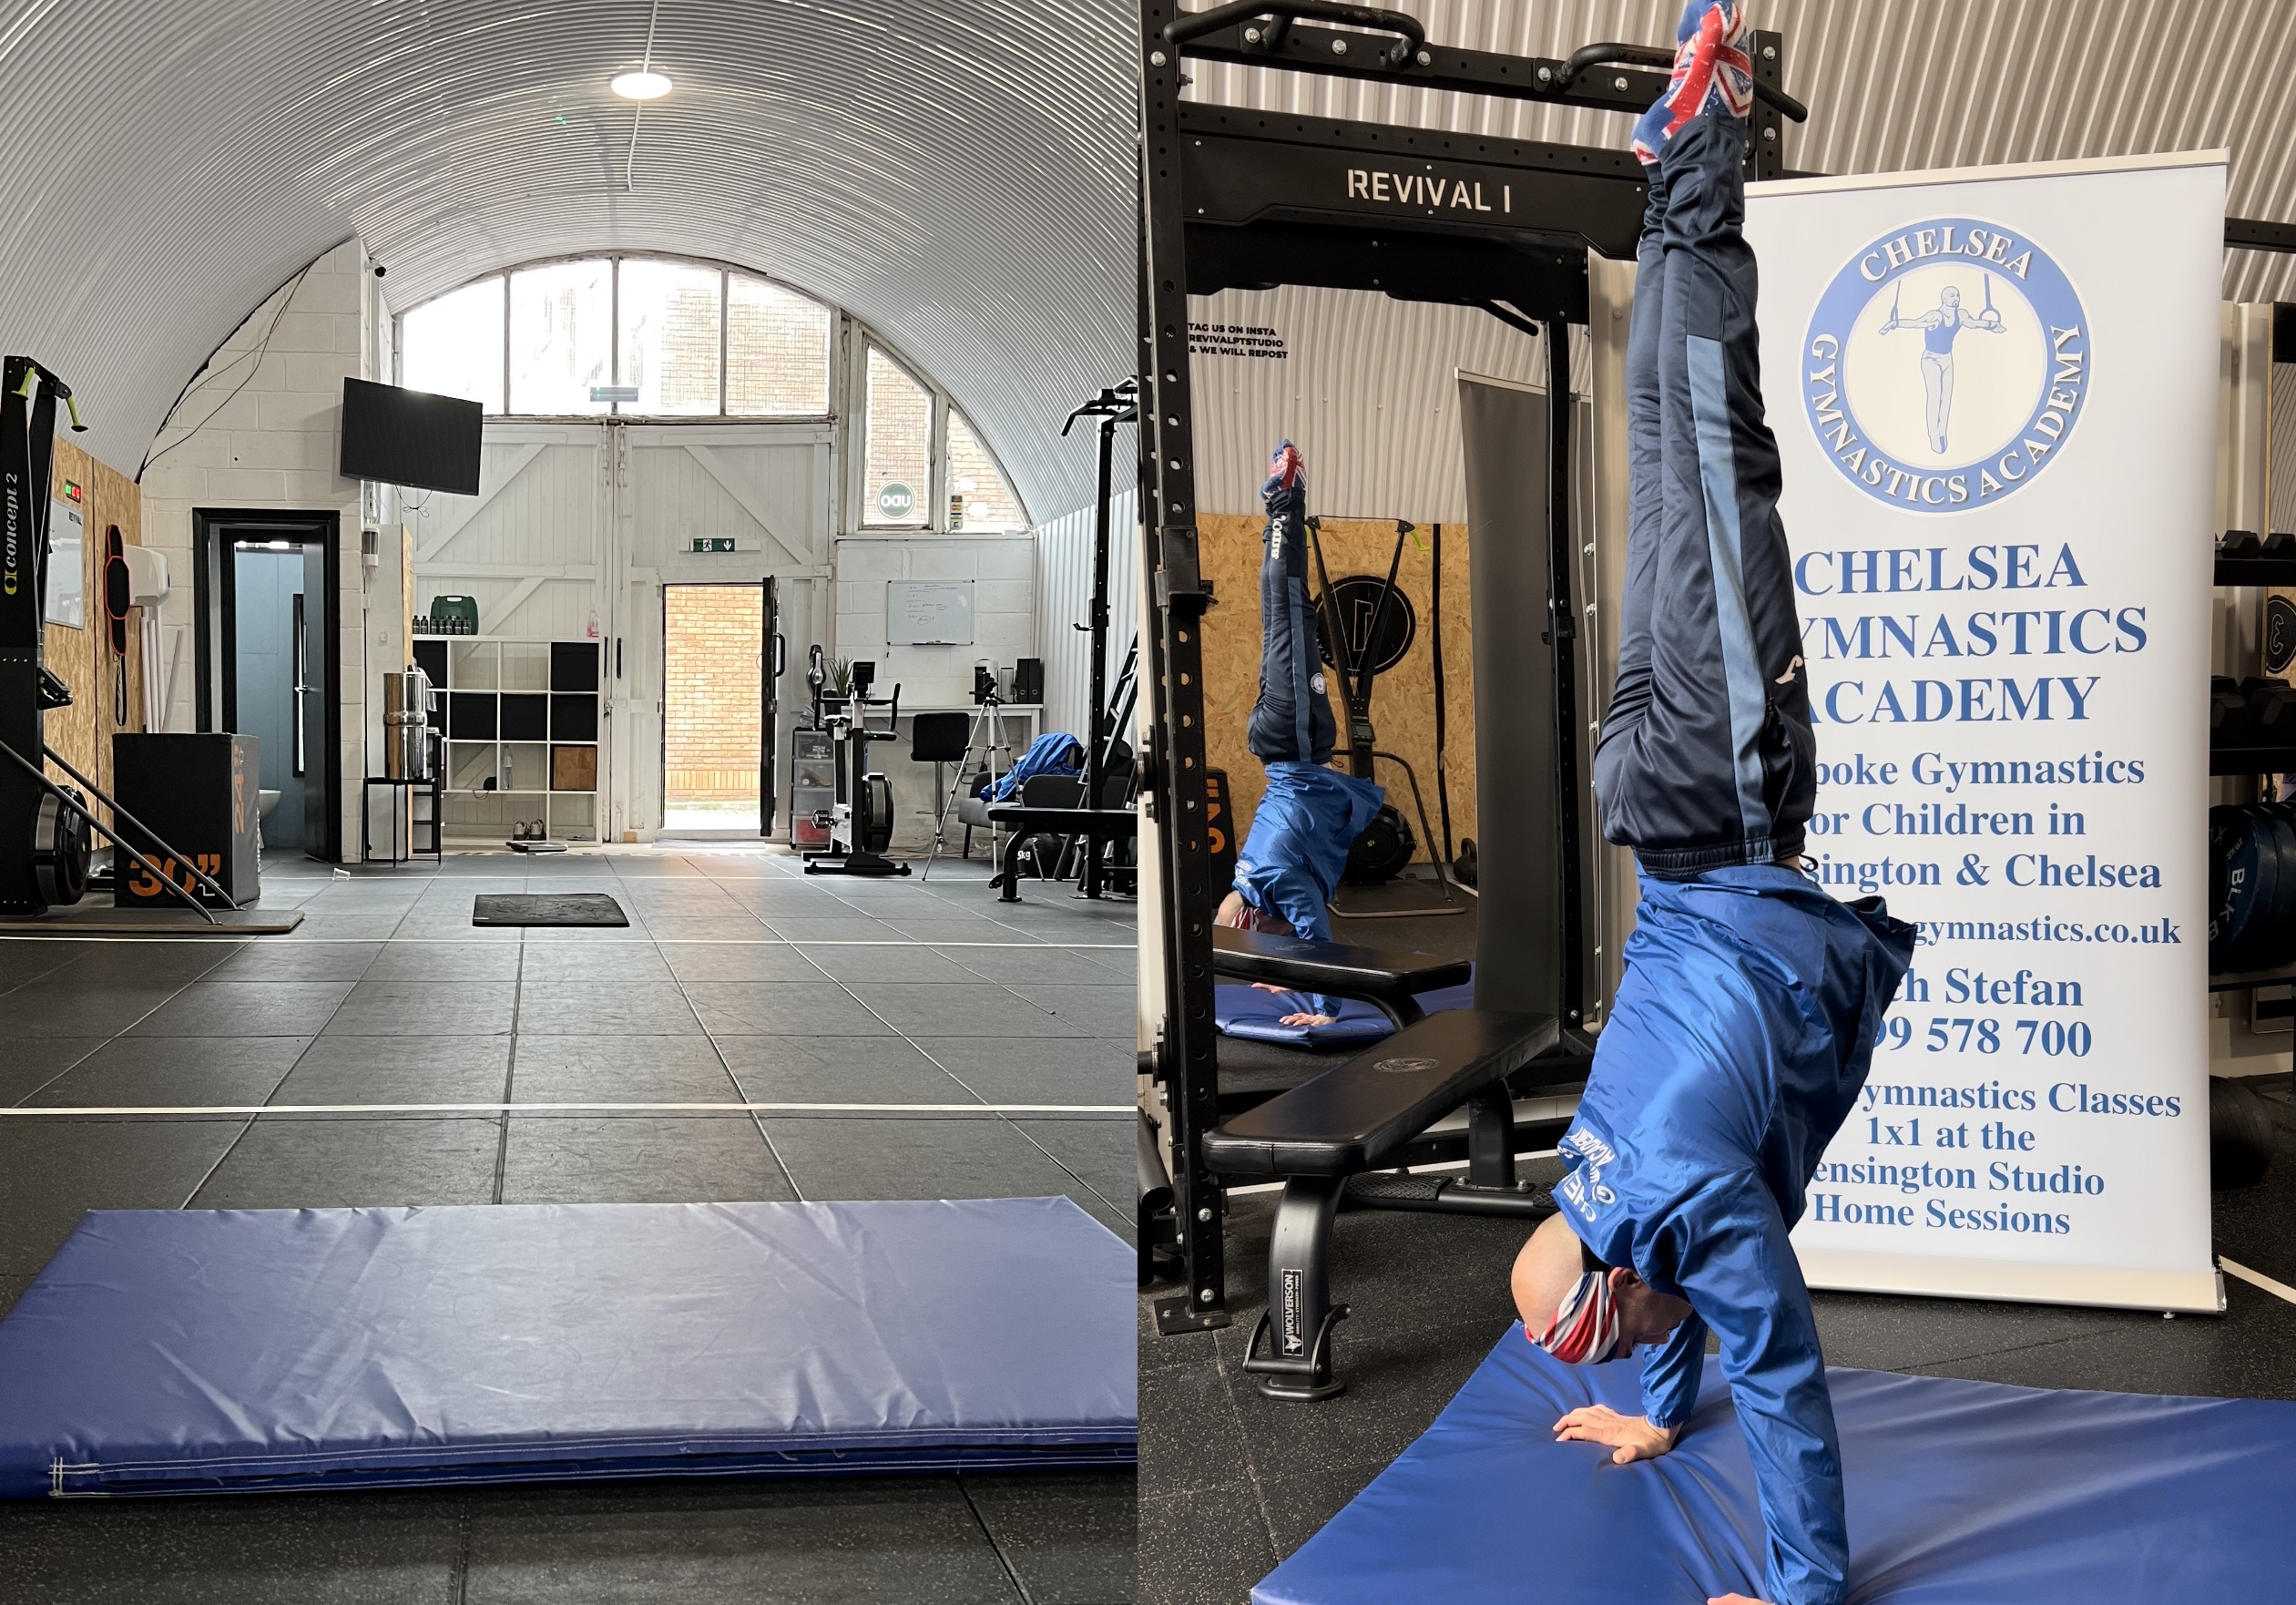 Gymnastics Sessions in Hammersmith for Children - Chelsea Gymnastics Academy